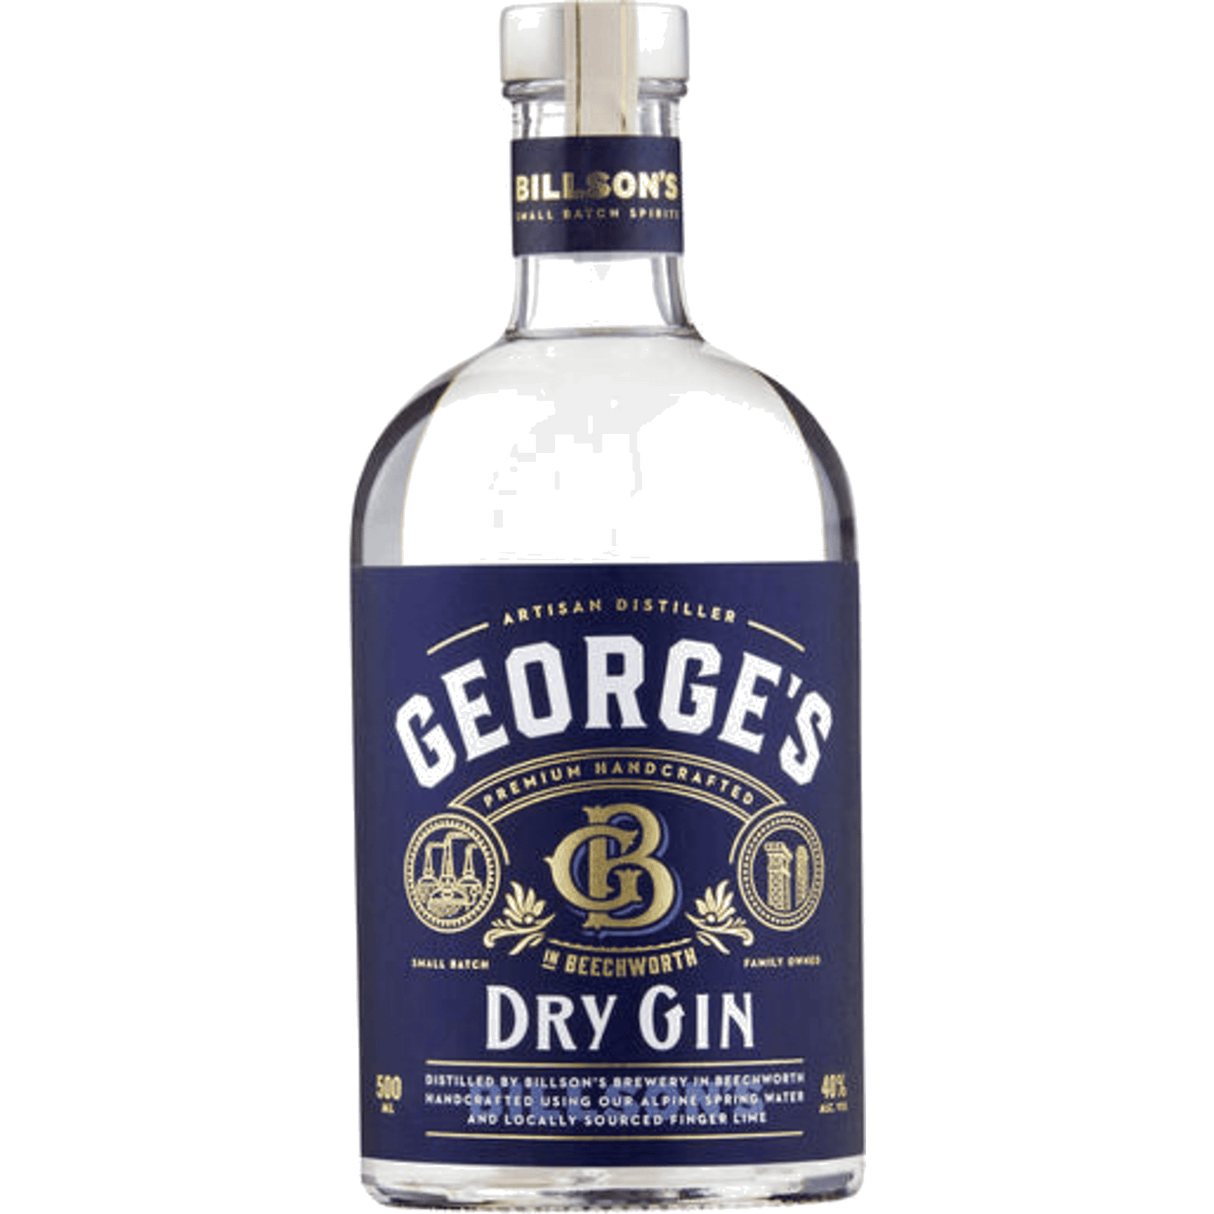 Billson's George's Dry Gin 500ml